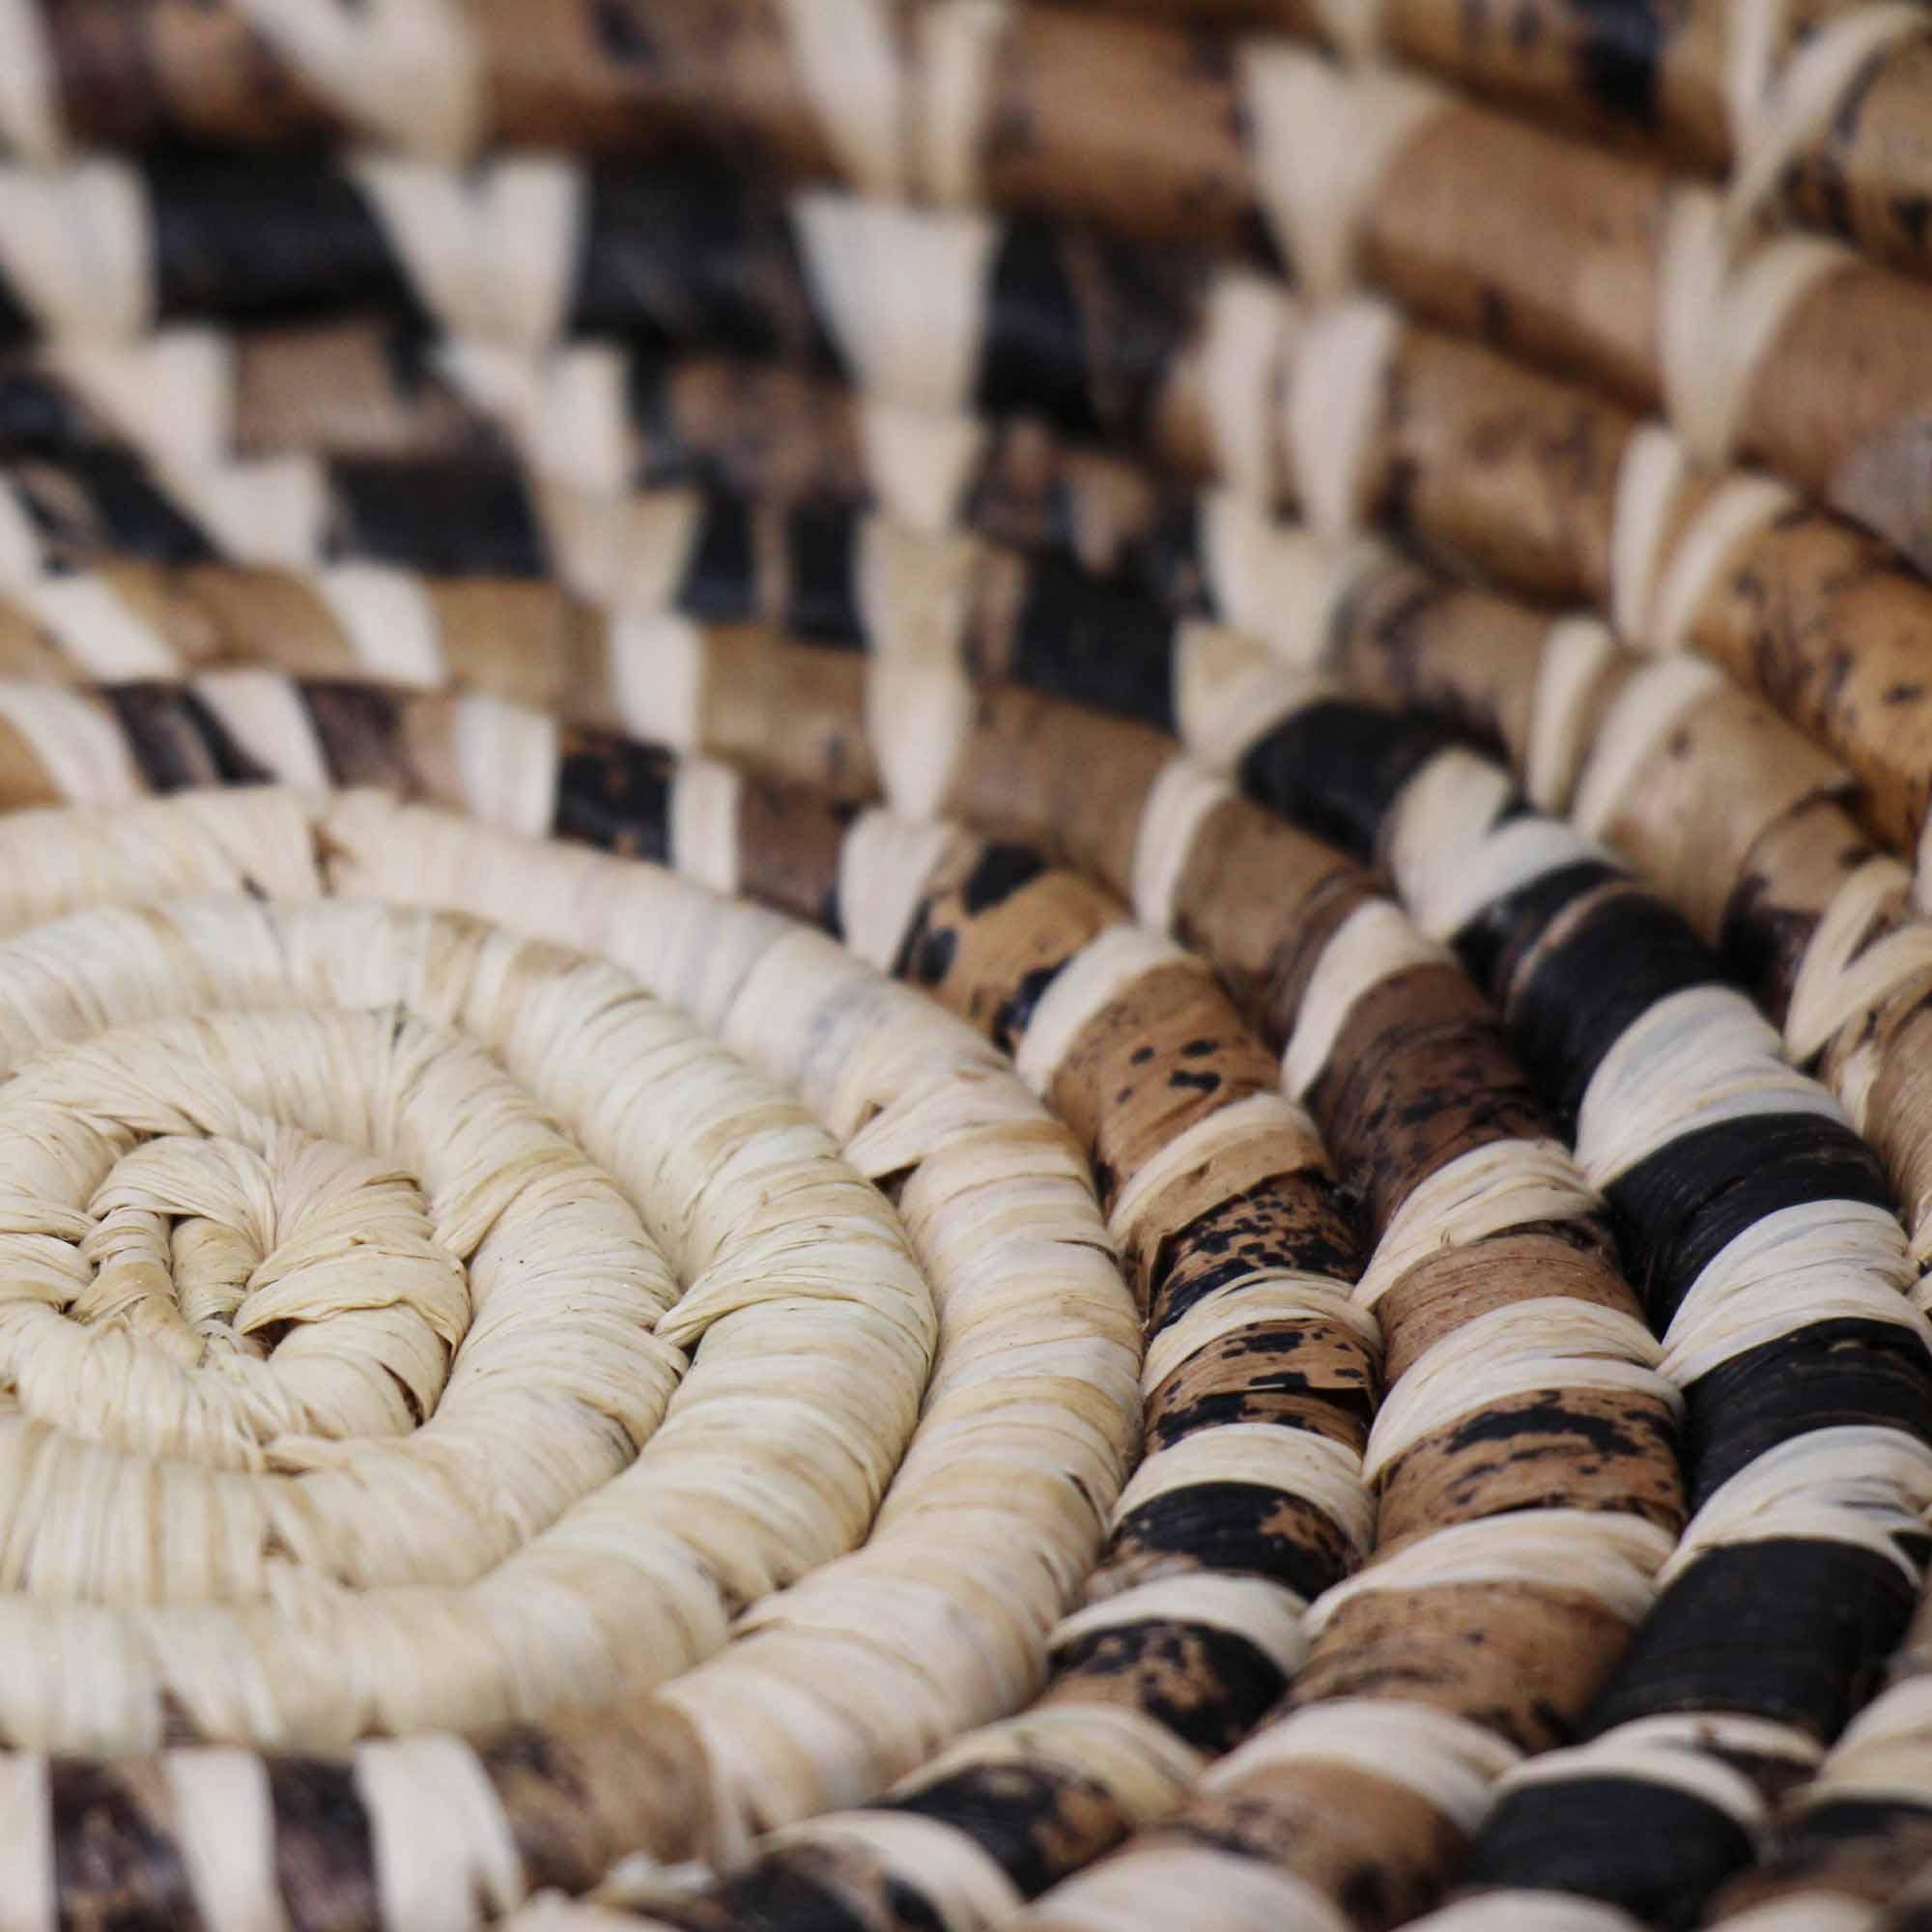 Woven Sisal Basket, Wheat Stalk Spirals In Natural - Flyclothing LLC